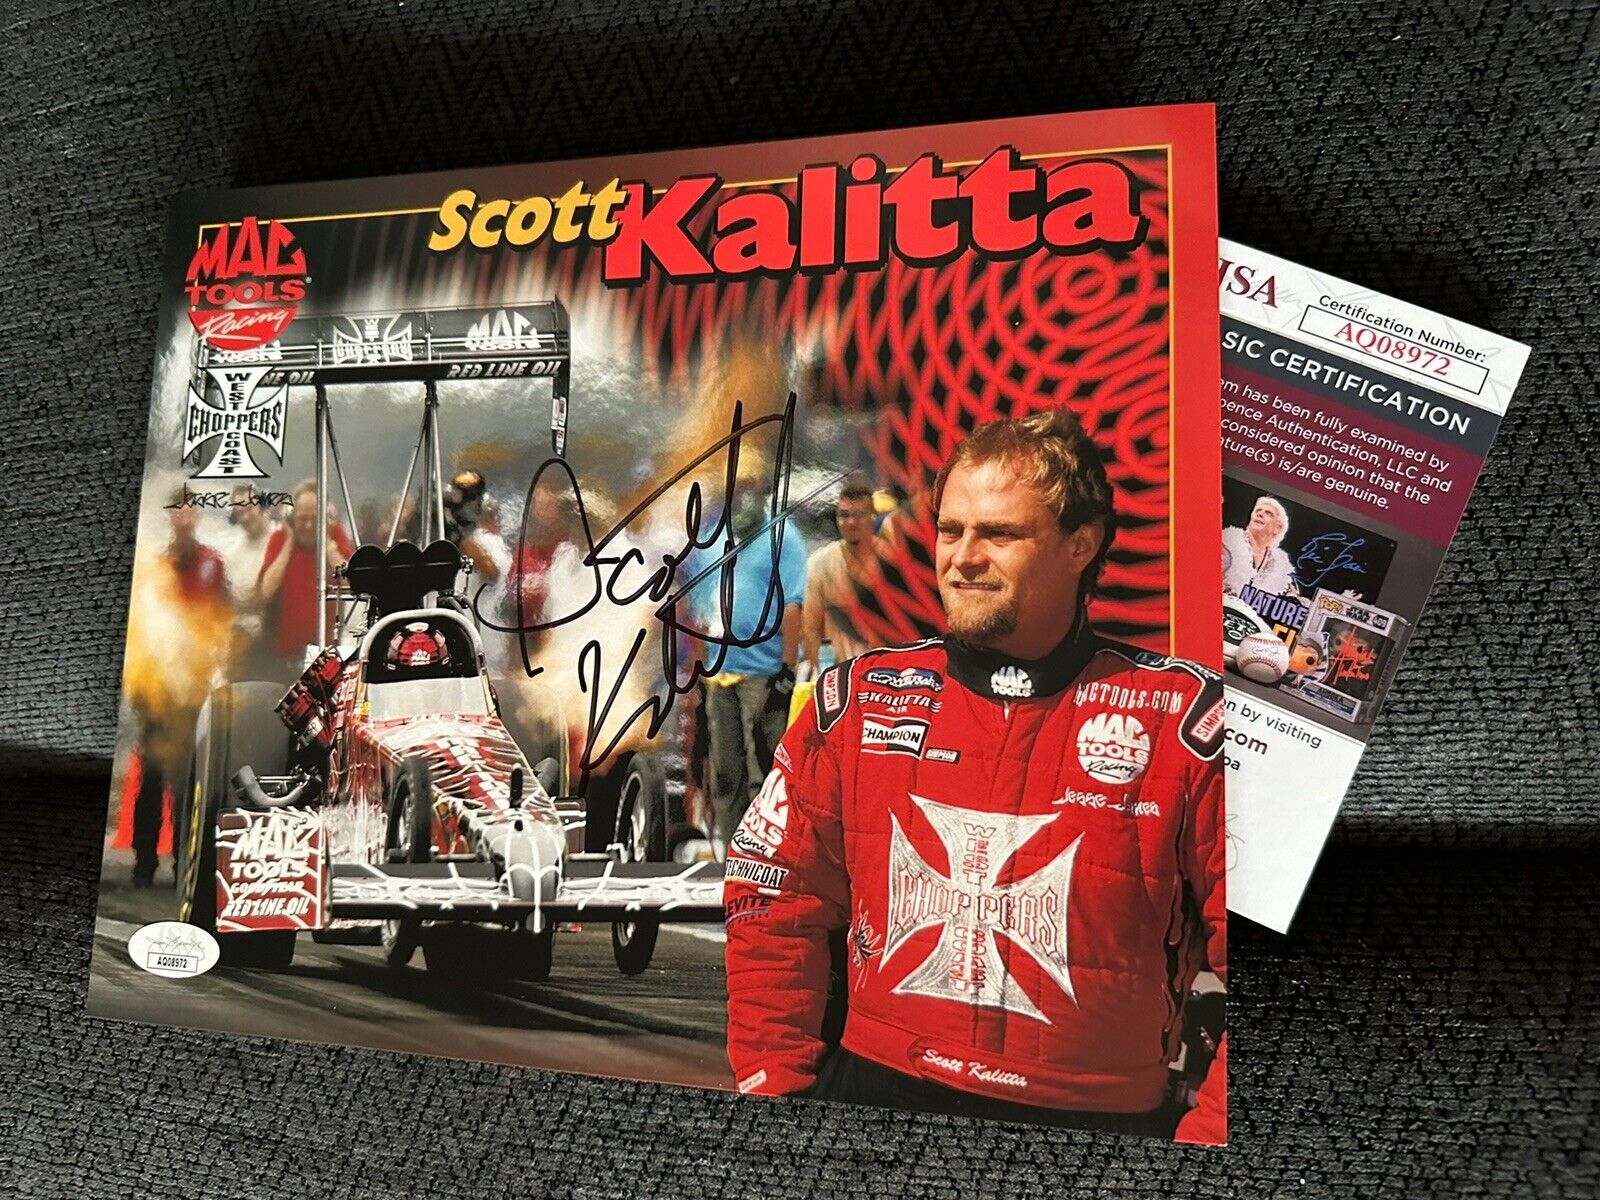 Scott Kalitta Signed 2004 NHRA Promo hero Card JSA Authentication COA Deceased